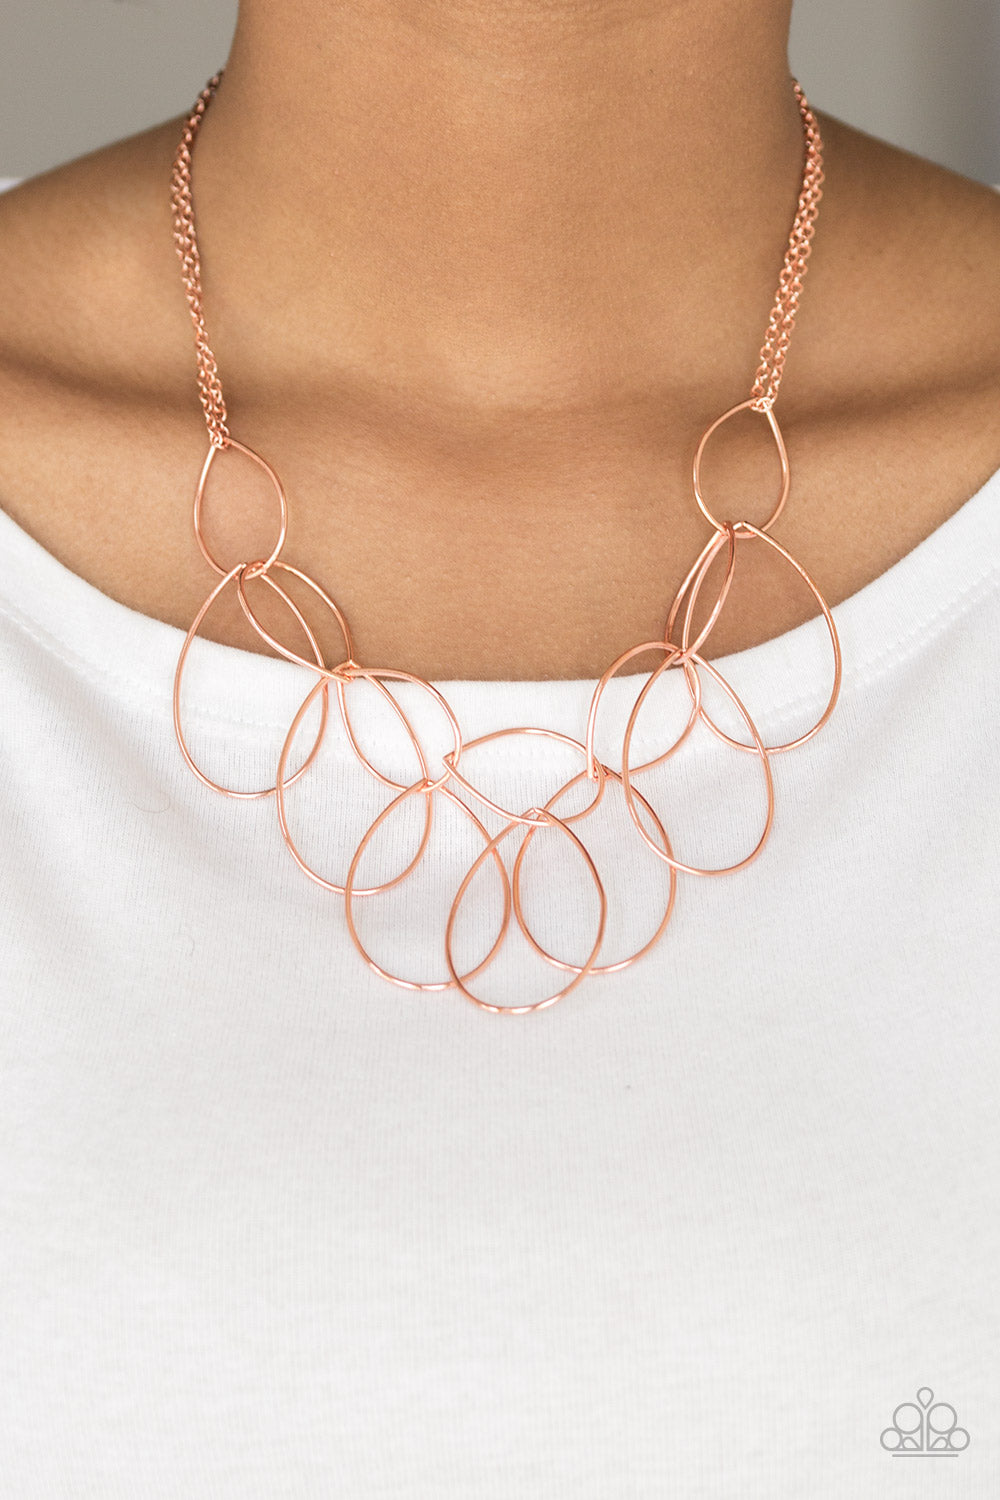 Top TEAR Fashion - copper - Paparazzi necklace